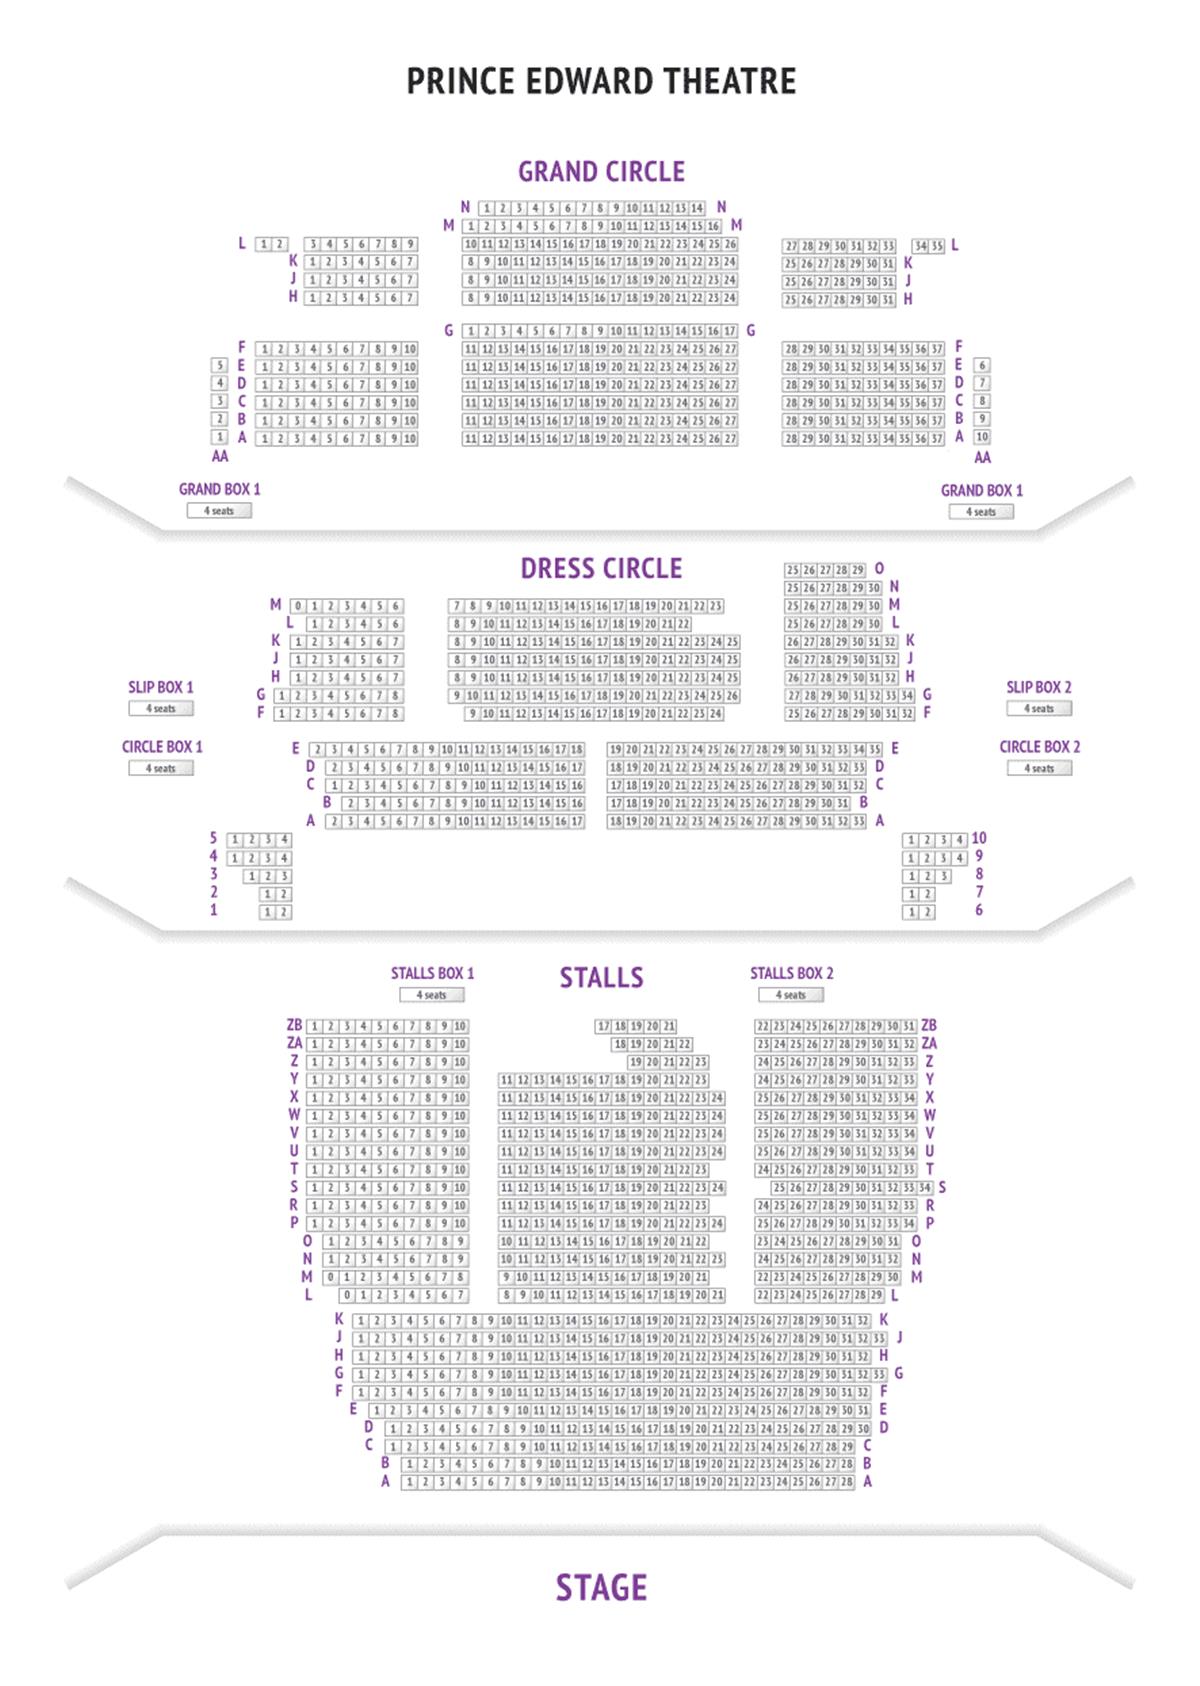 Prince Edward Theater London Seating Chart